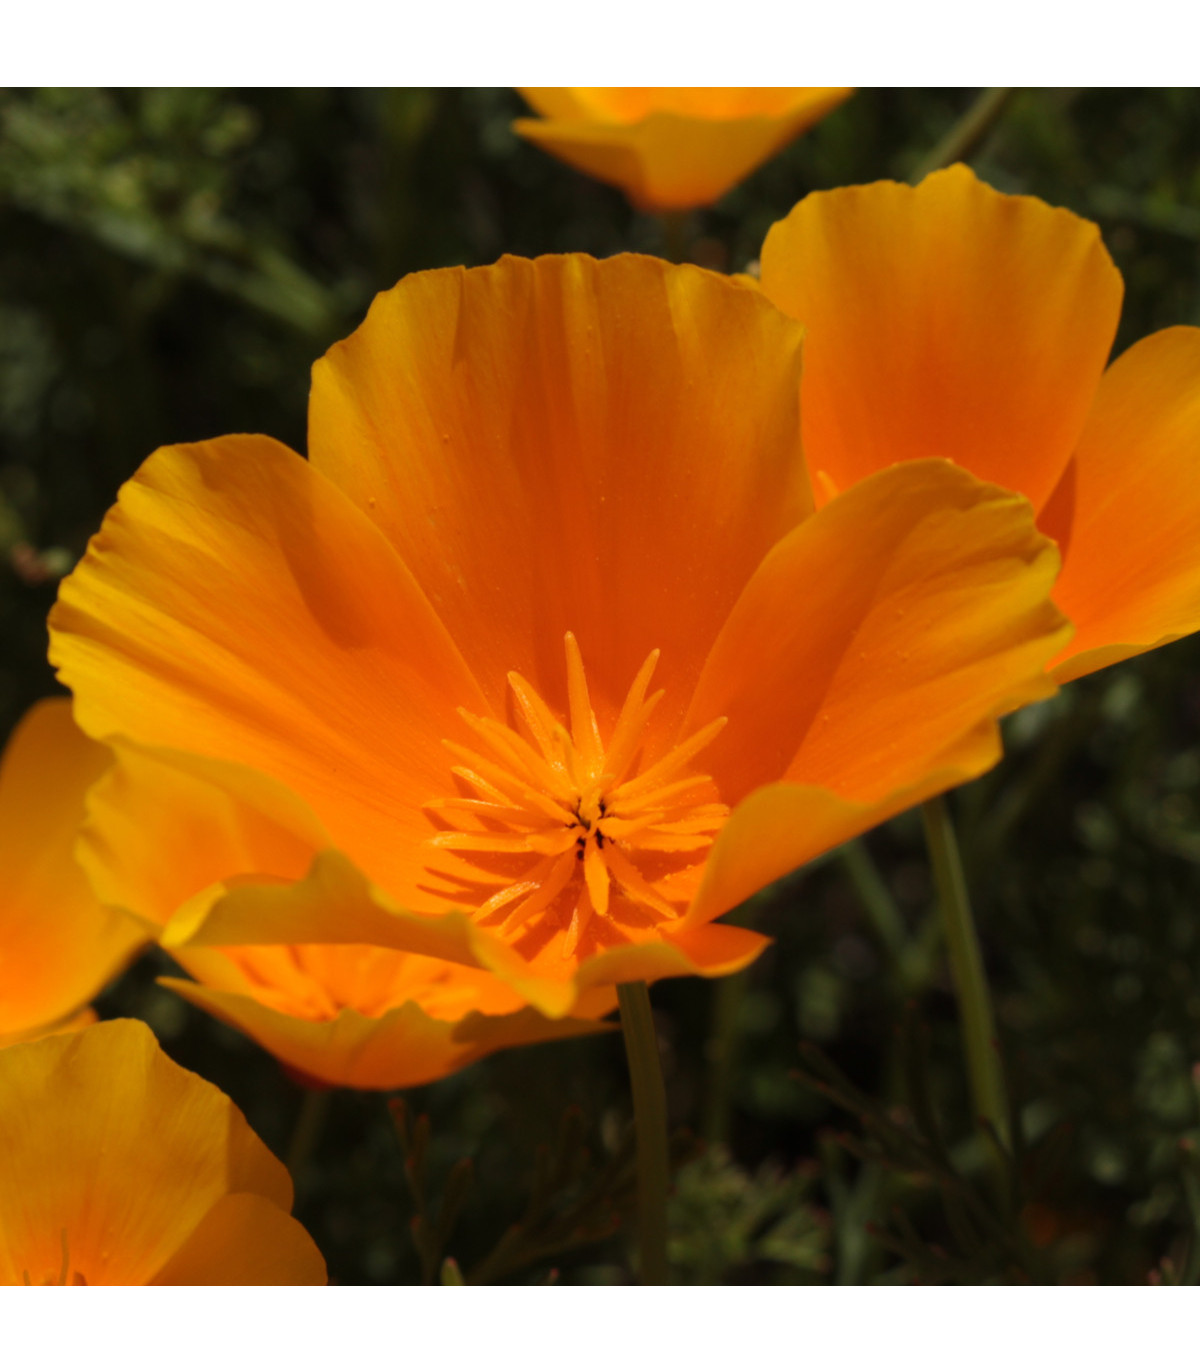 Sluncovka kalifornská oranžová - Eschscholzia californica - osivo sluncovky - 200 ks